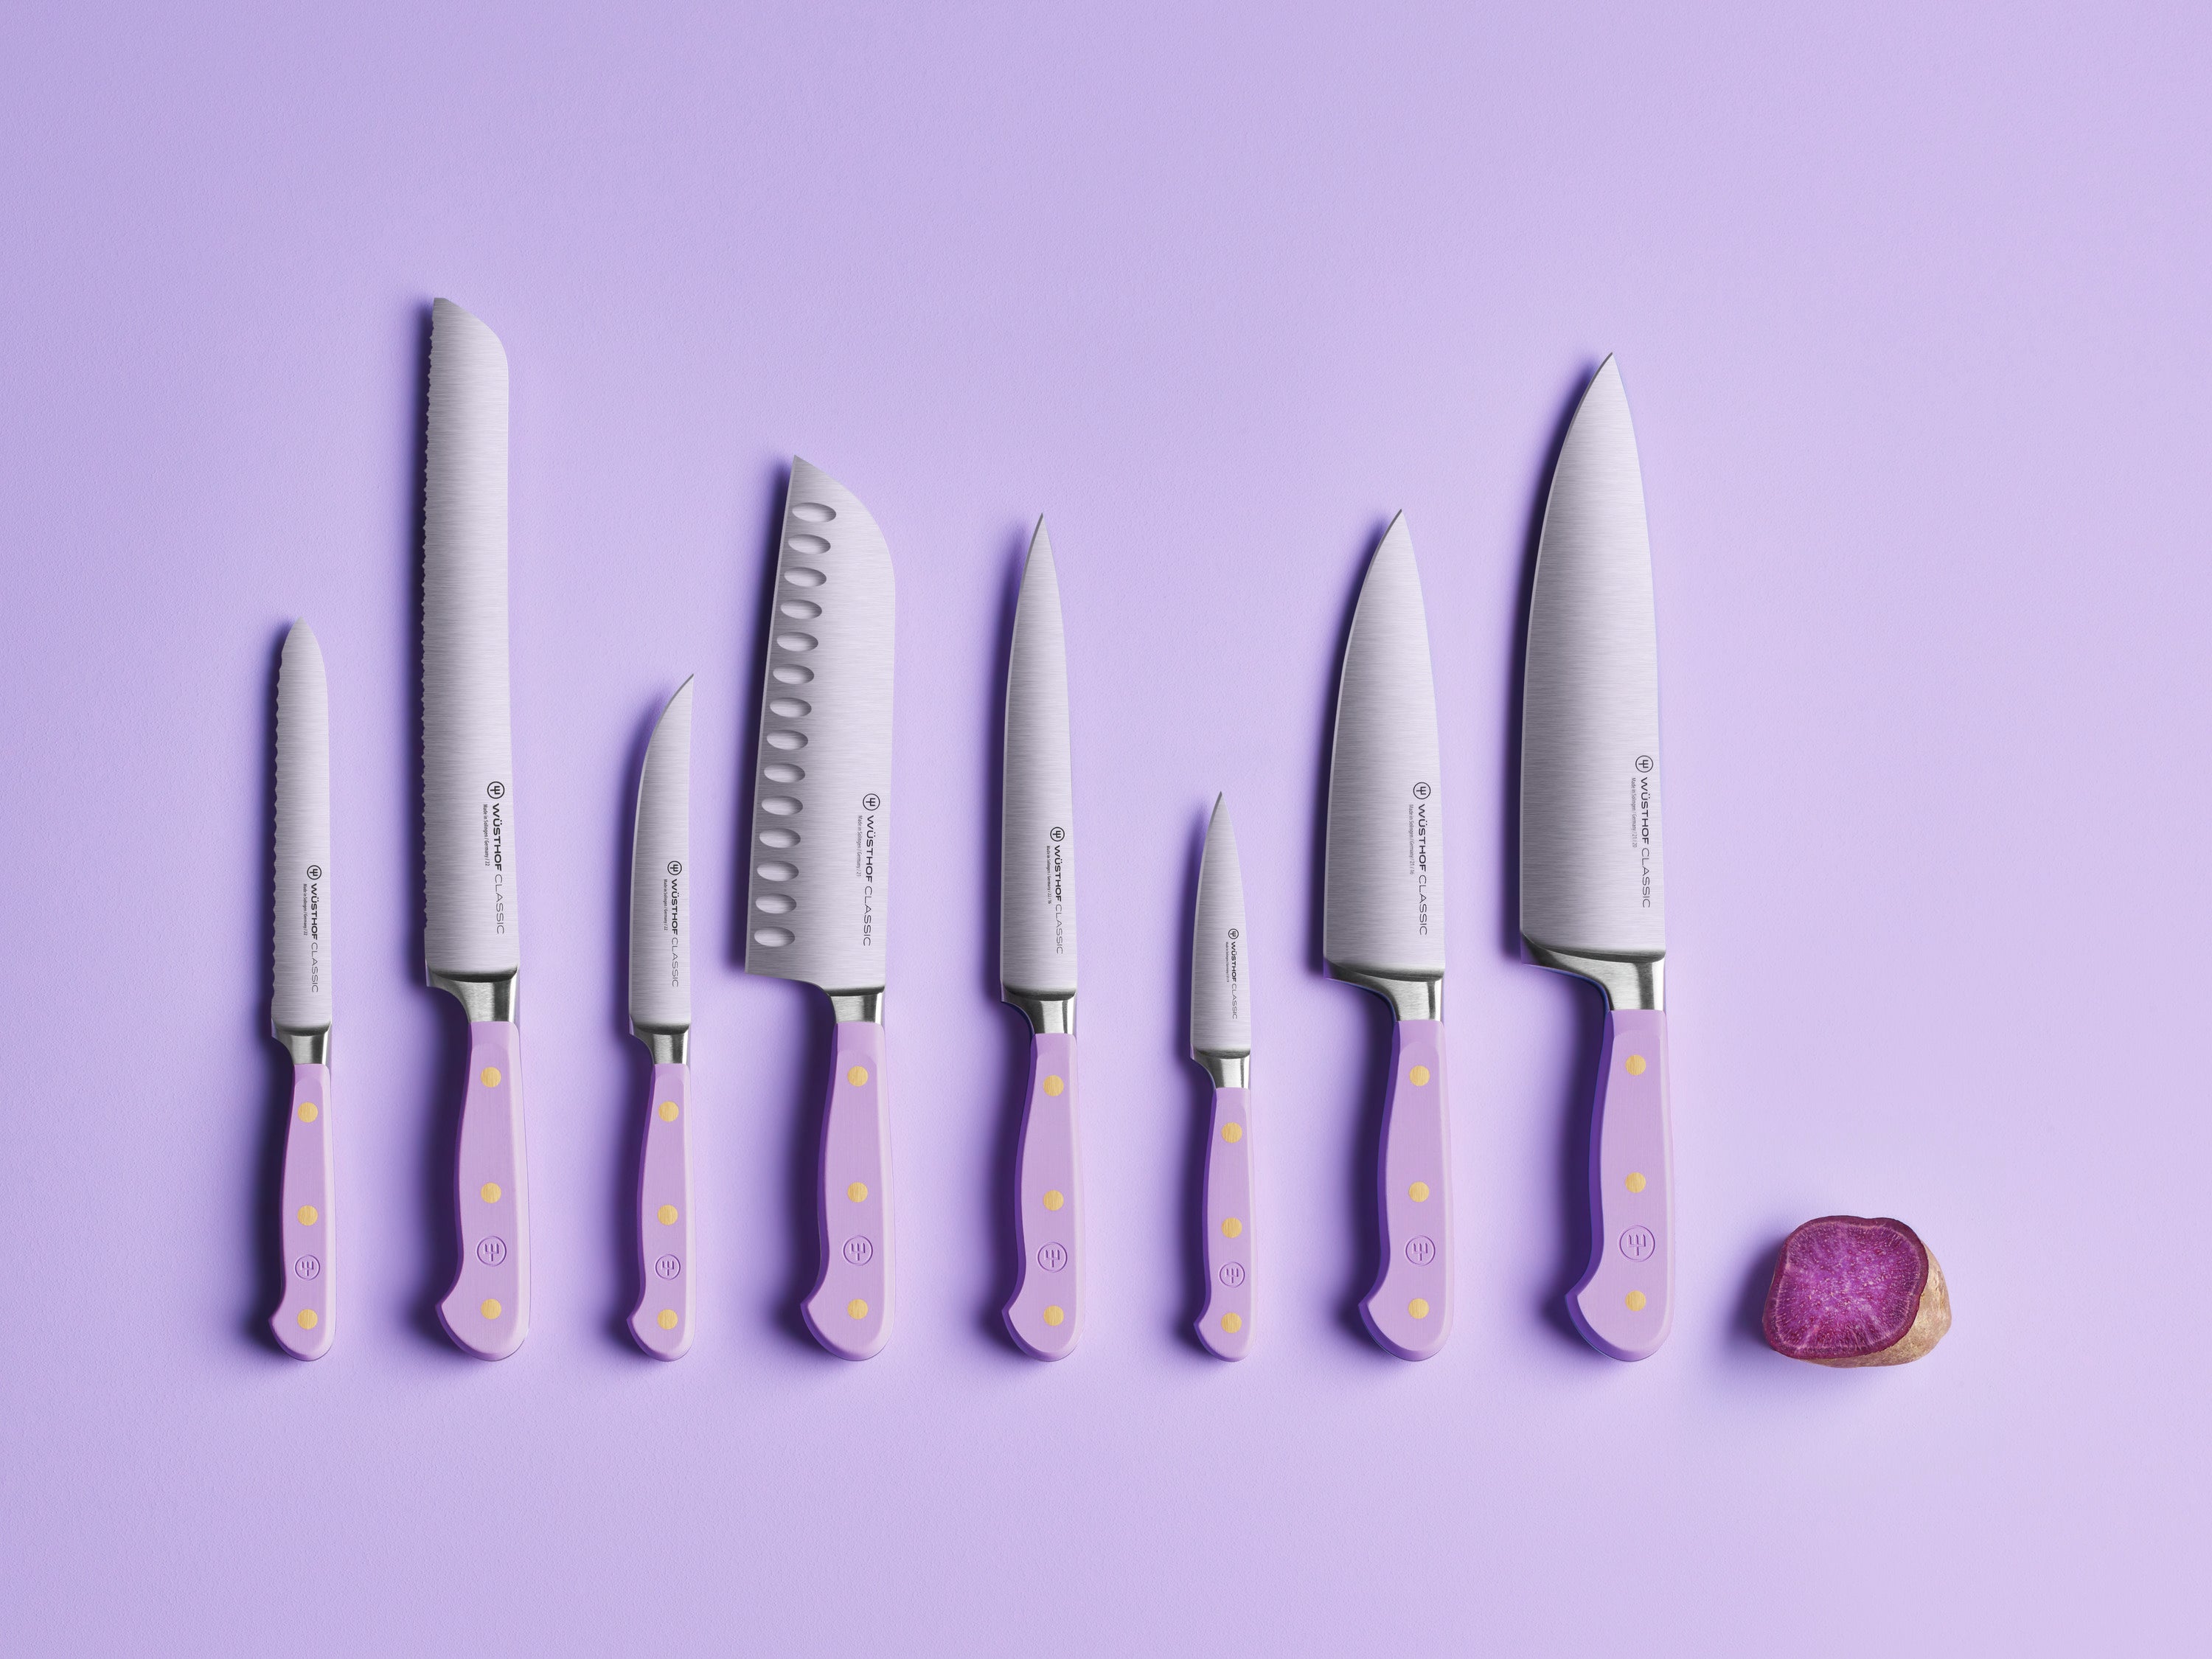 Wusthof Classic Colour Purple Yam Utility Knife 16cm 1061704216W